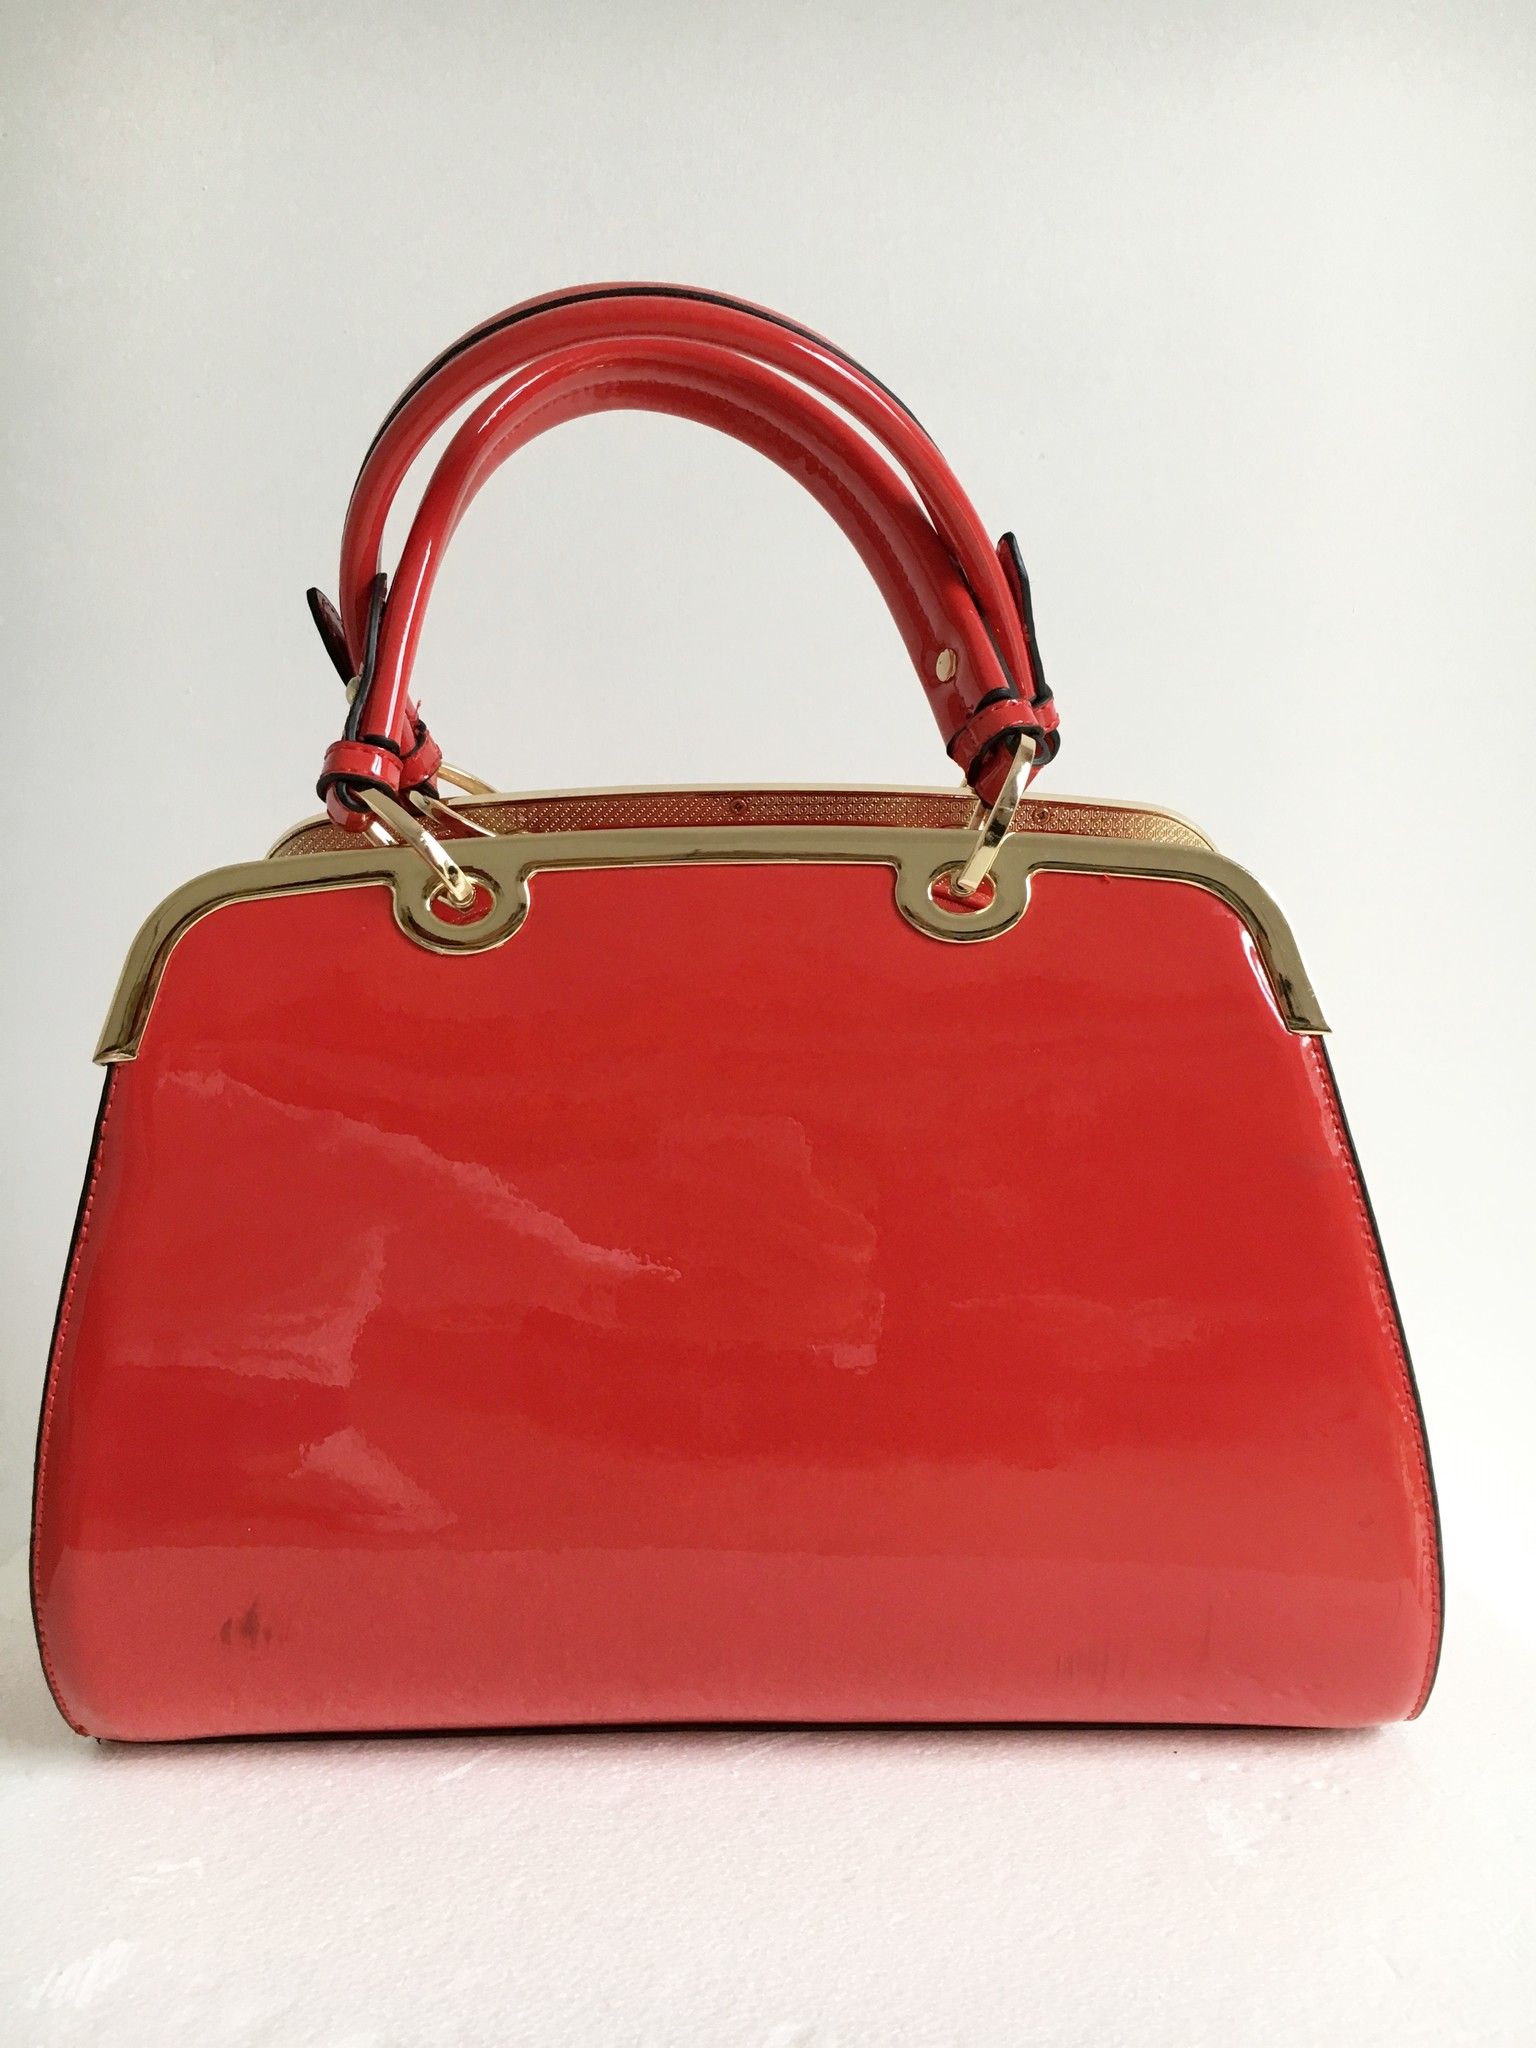 Patent leather handbag with gold trim Cod.1024